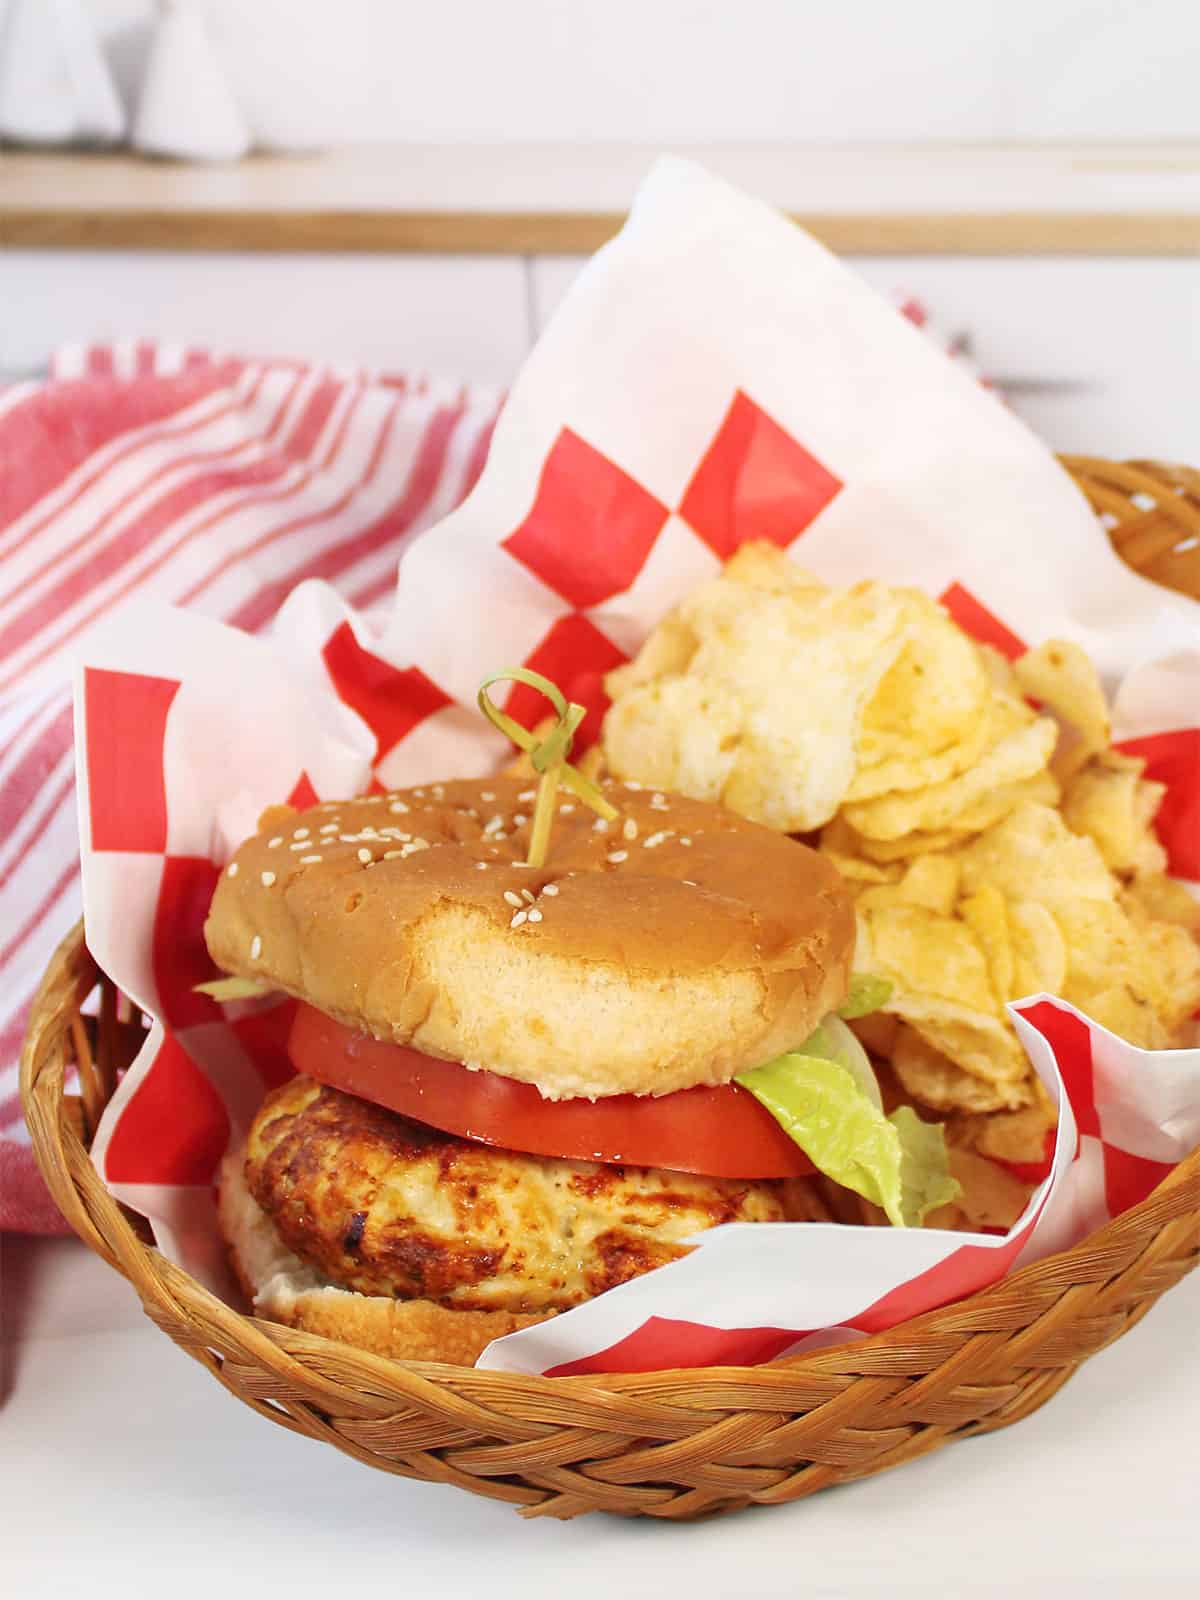 Chicken Burger in basket with chips.